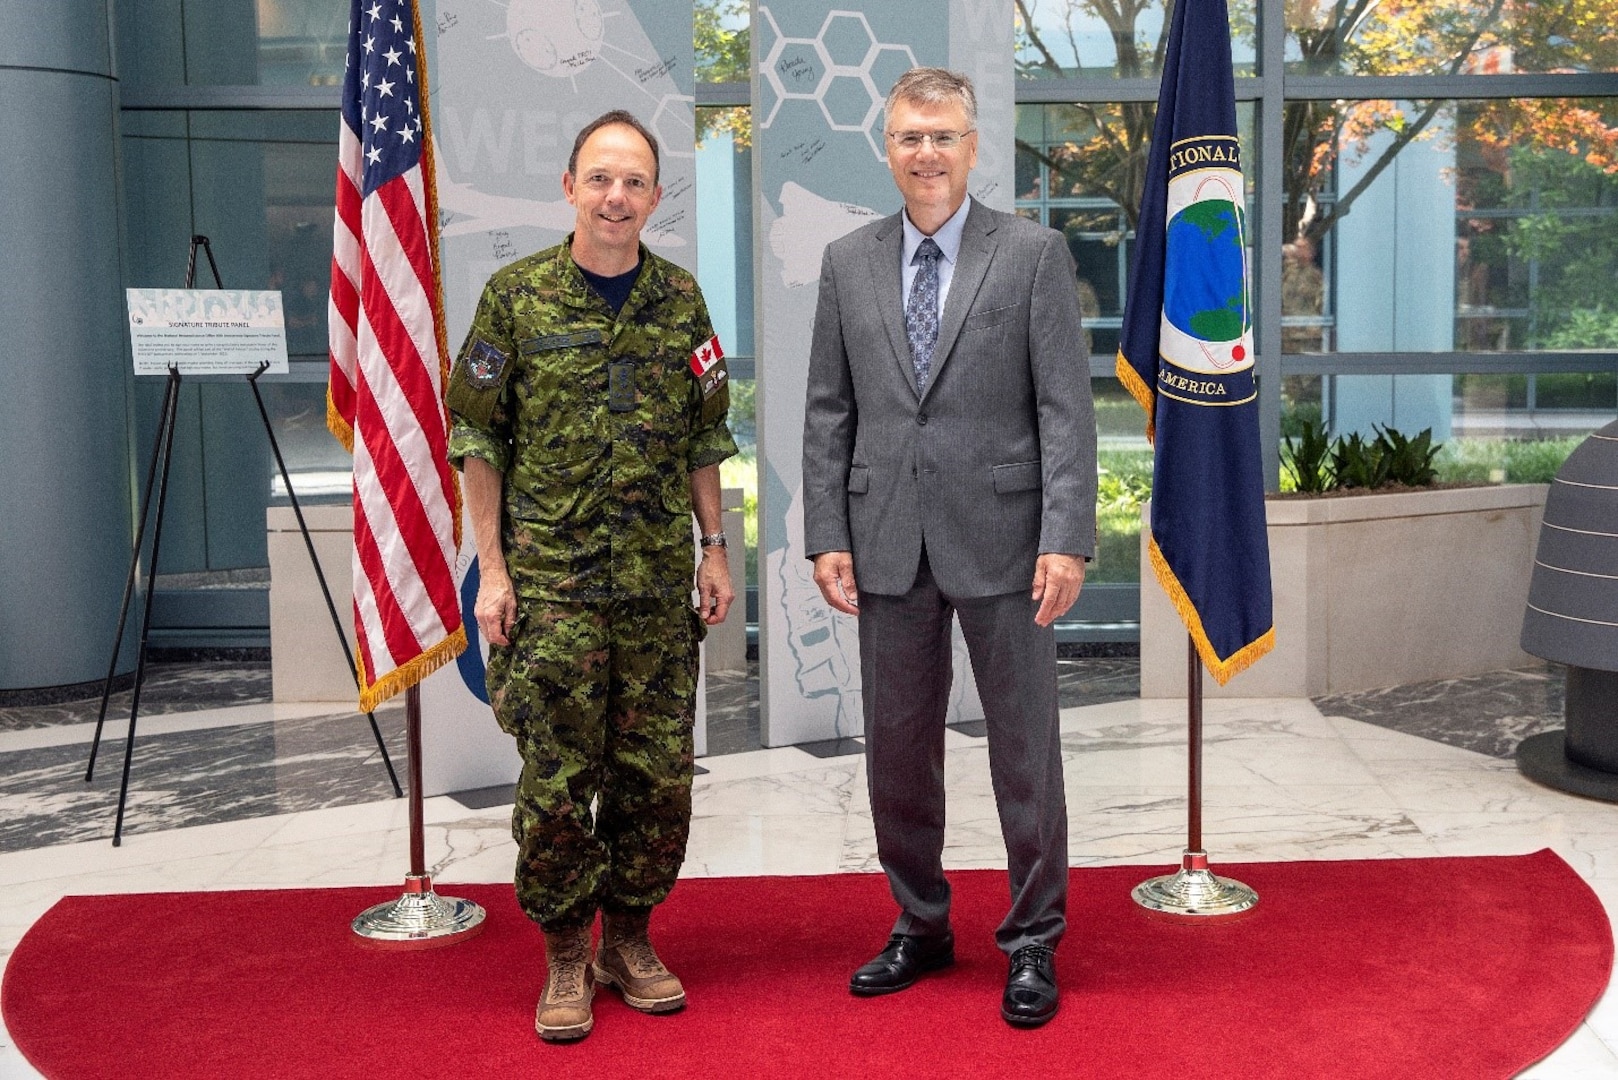 Deputy Commander of NORAD visits NRO headquarters